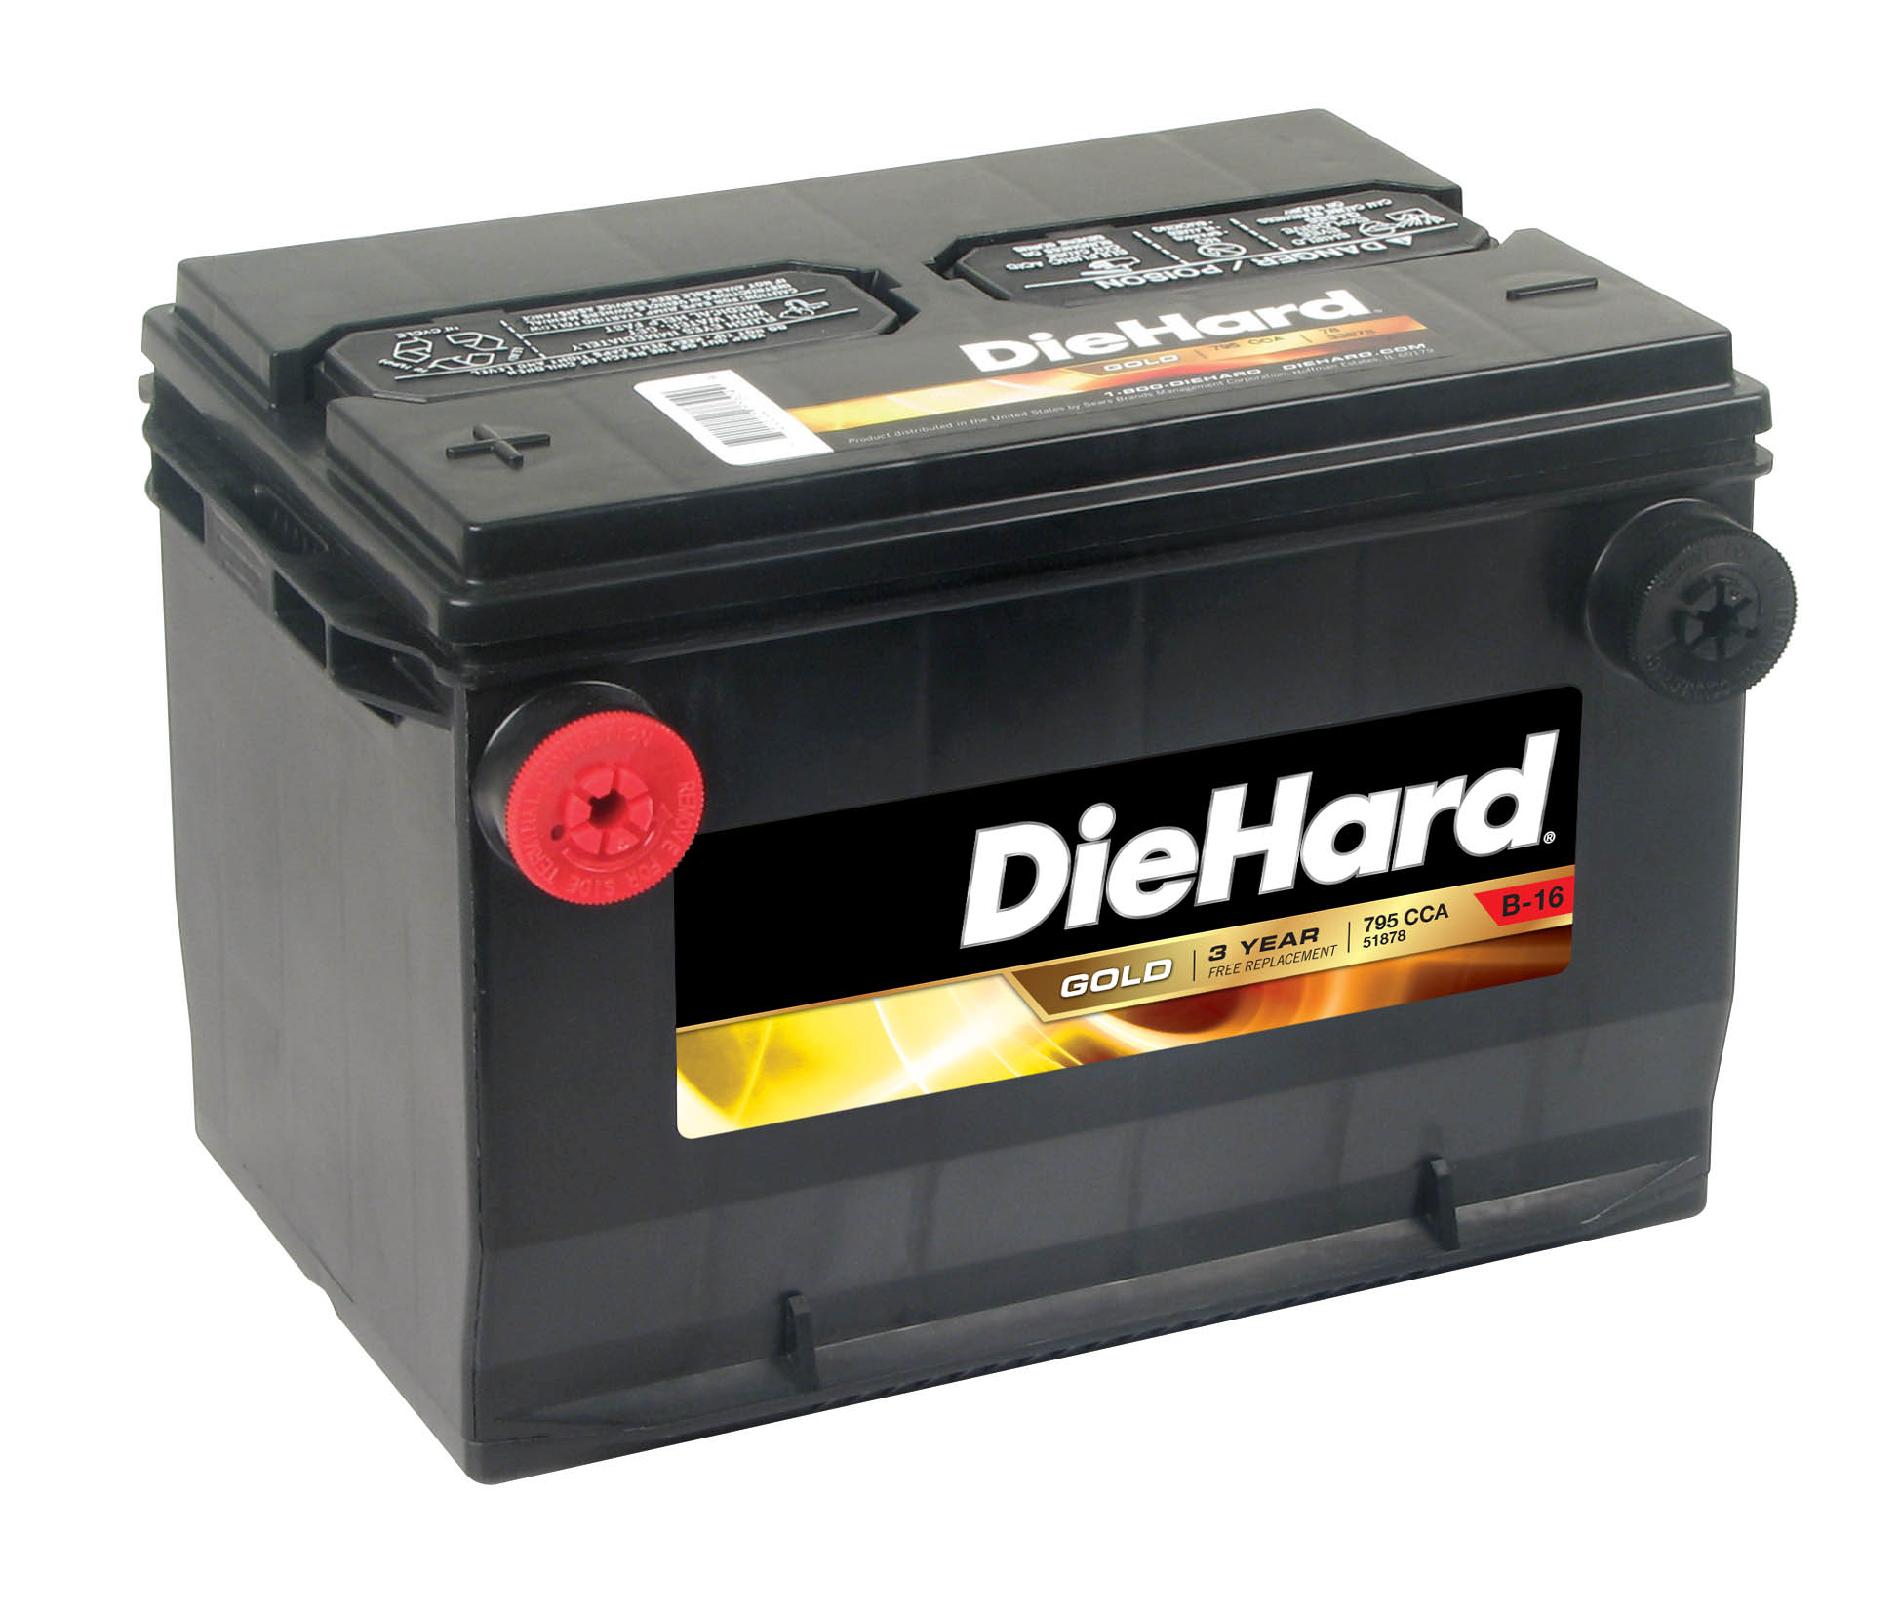 DieHard Gold Automotive Battery 51878 - Group Size JC-78